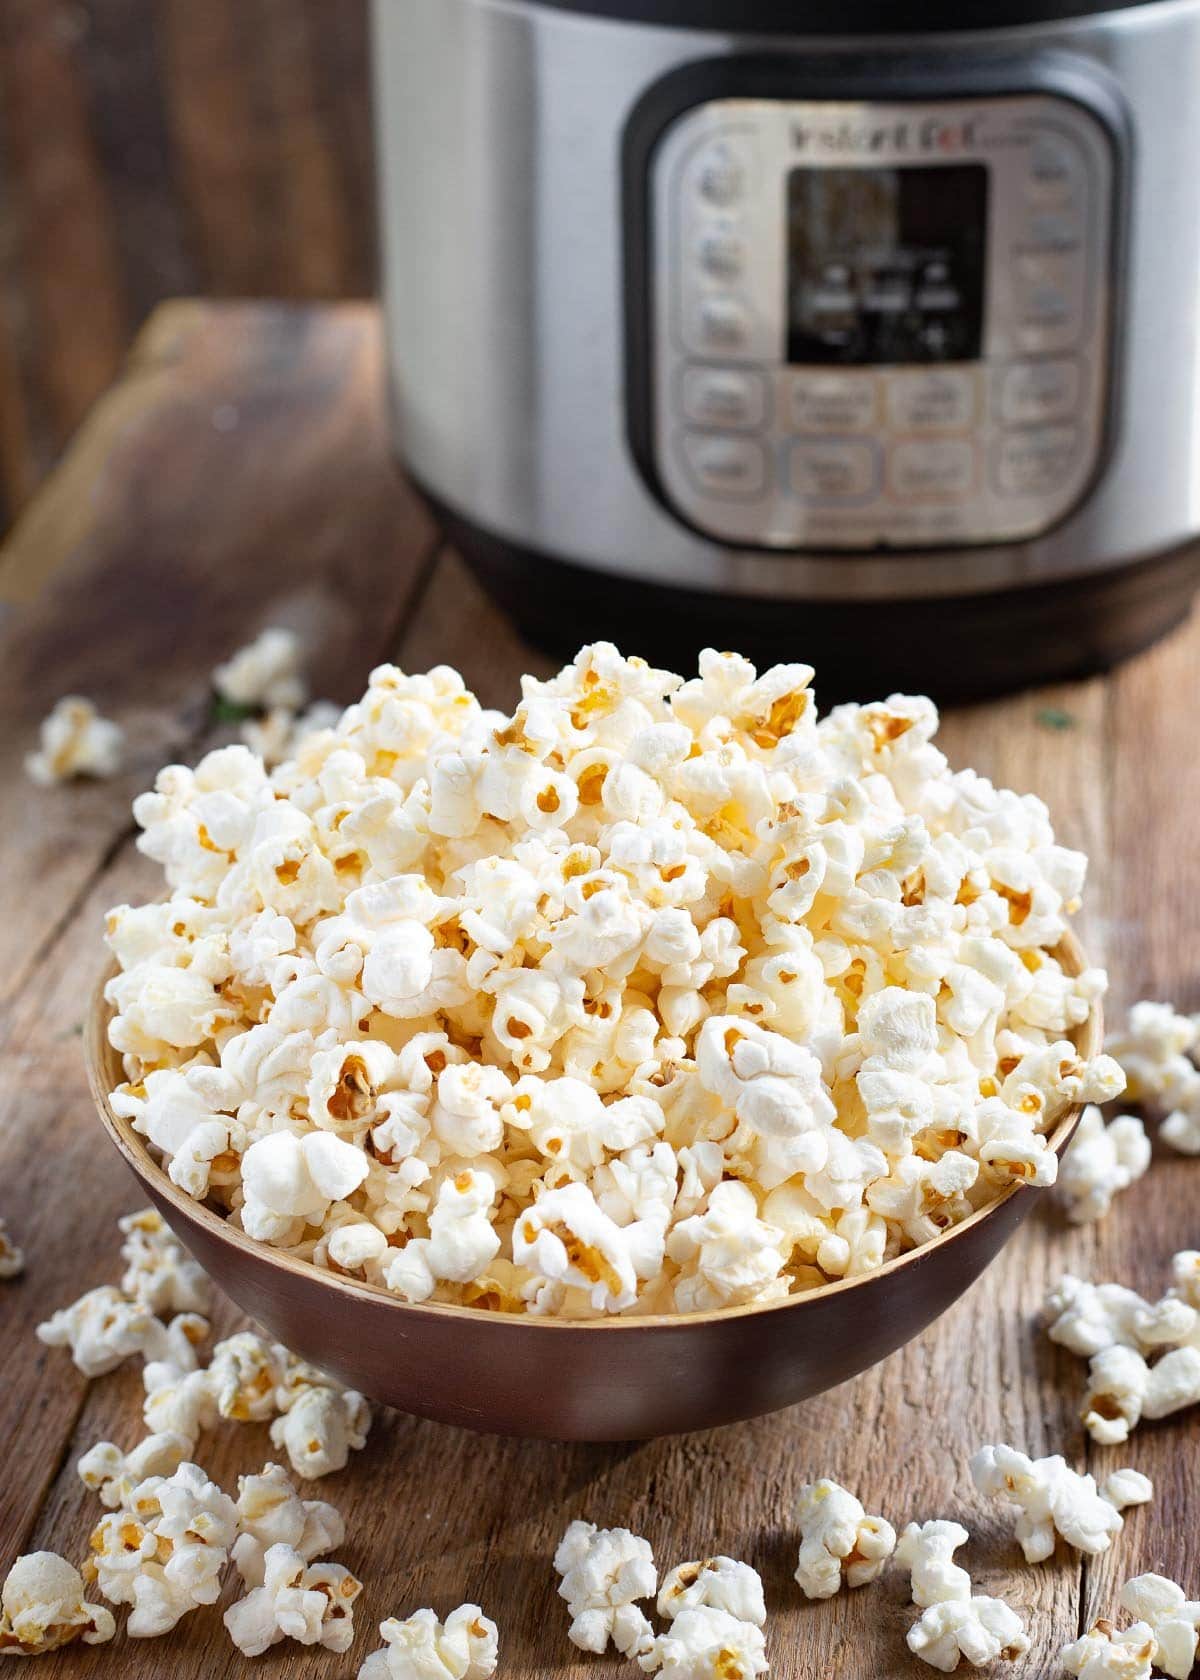 Pressure Cooker Popcorn: Exploding with Flavor